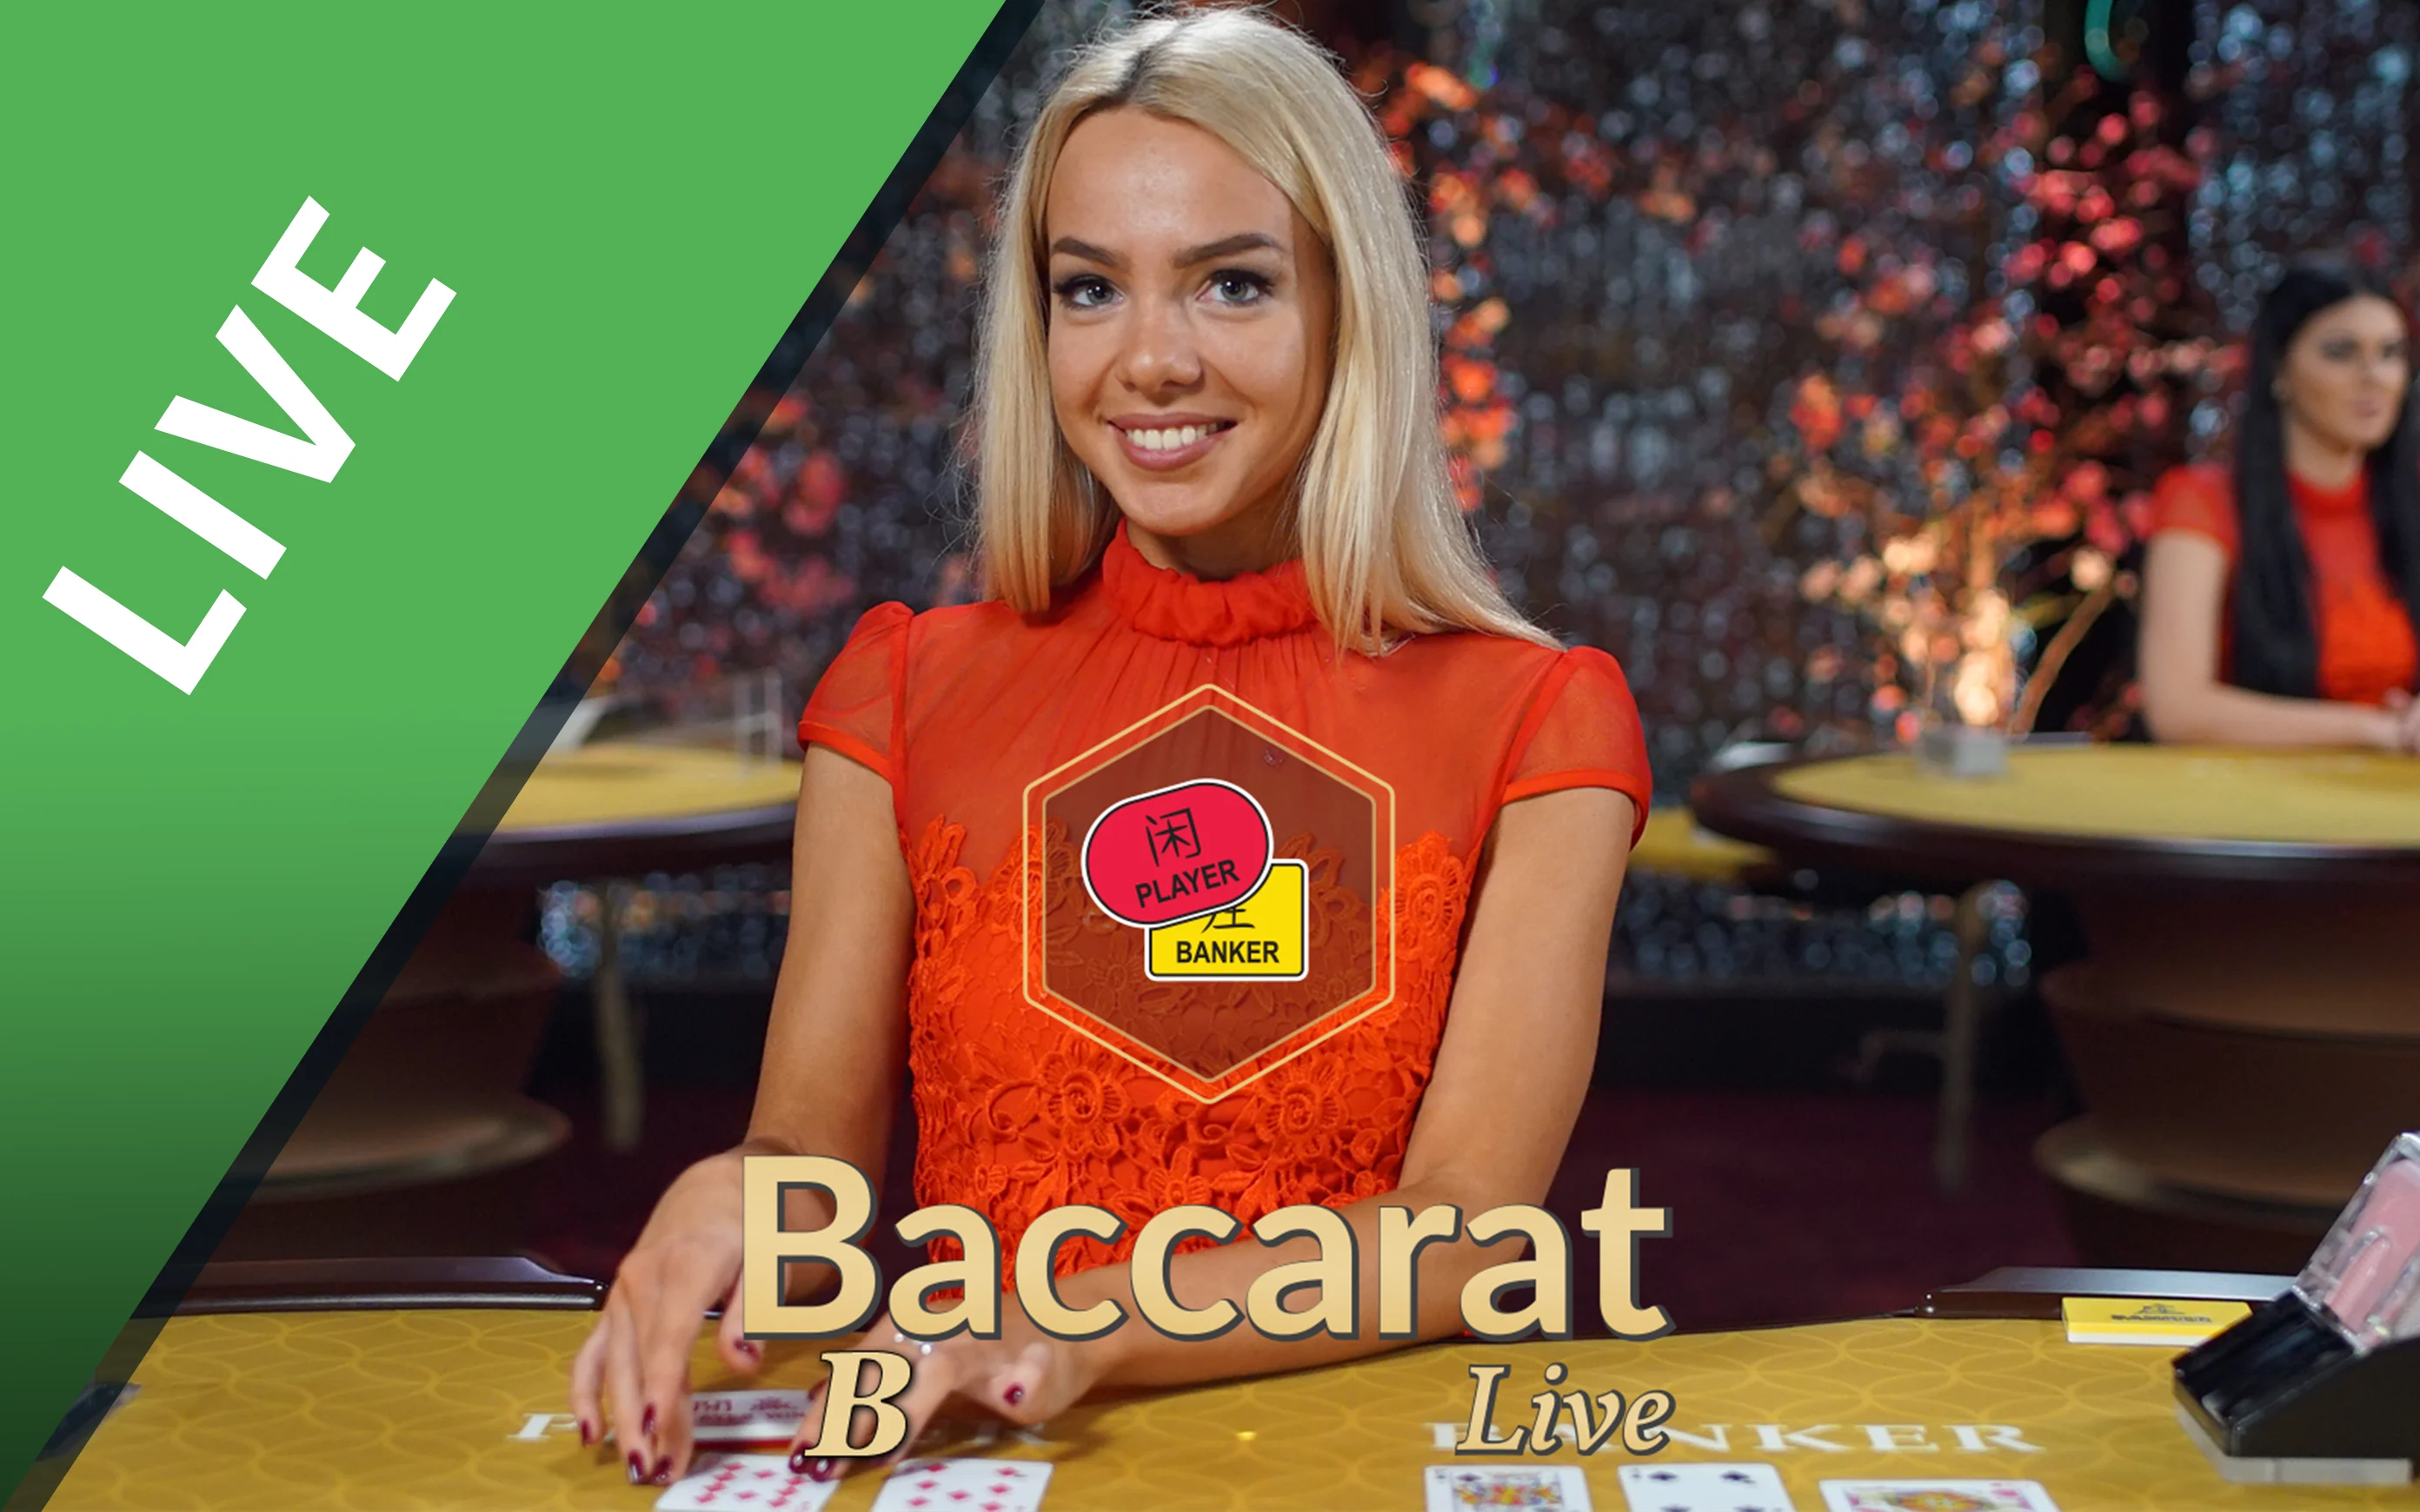 Play Baccarat B on Starcasino.be online casino